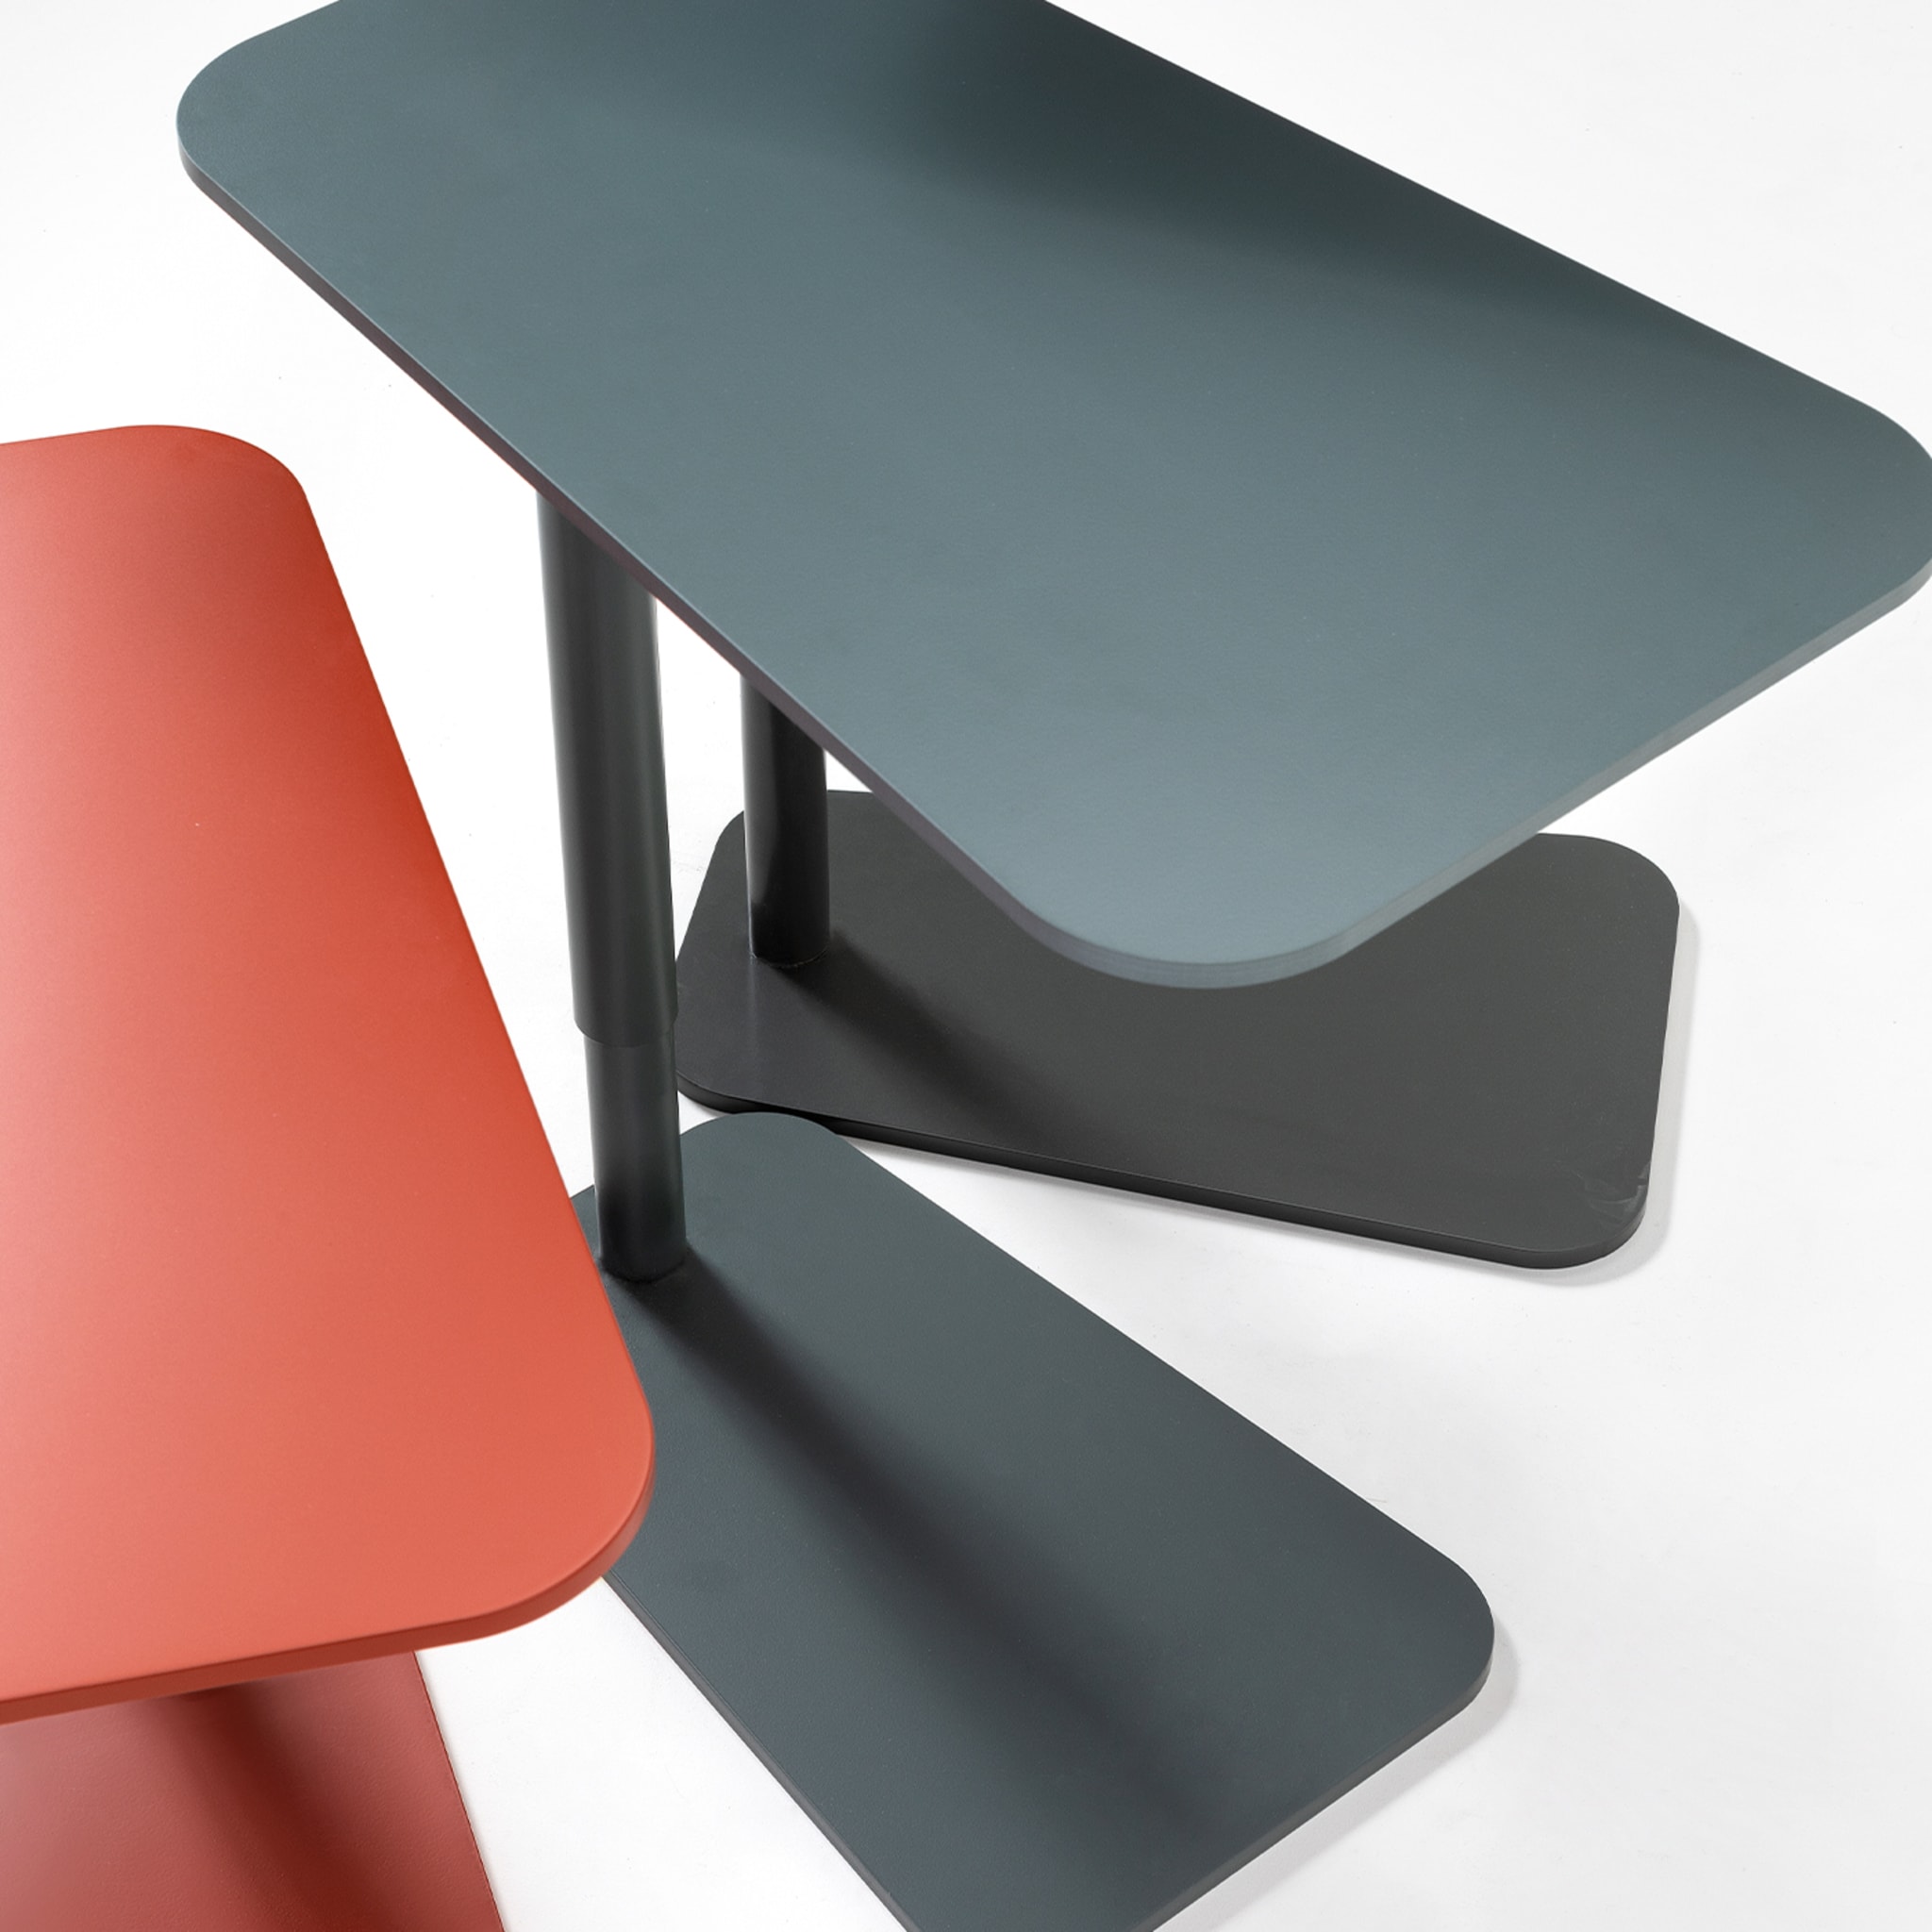 0130 Jens Dark-Green Side Table by Massimo Broglio - Alternative view 1